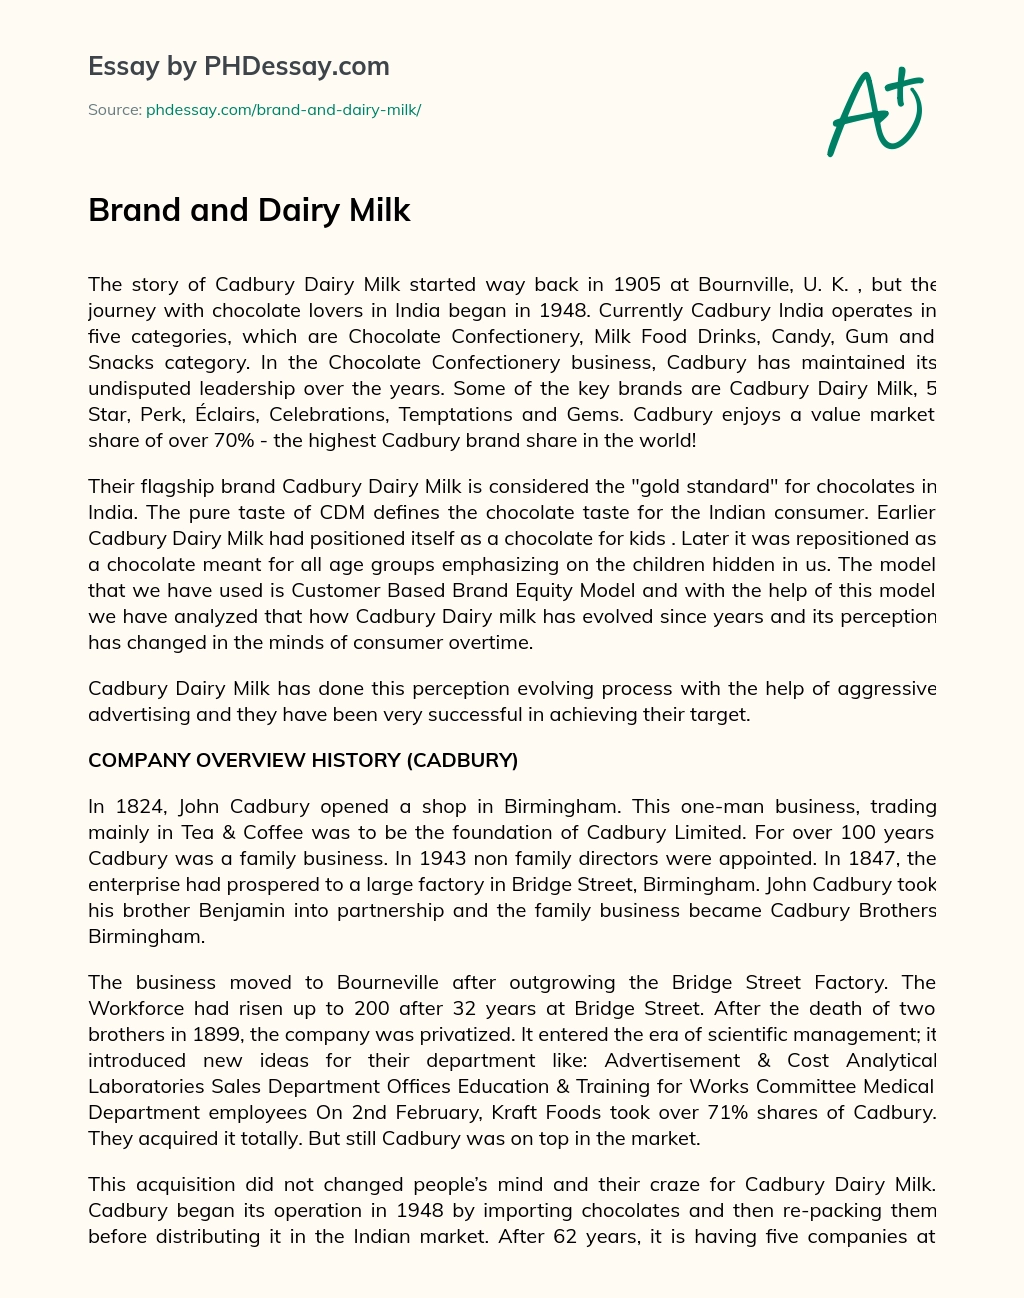 Brand and Dairy Milk essay